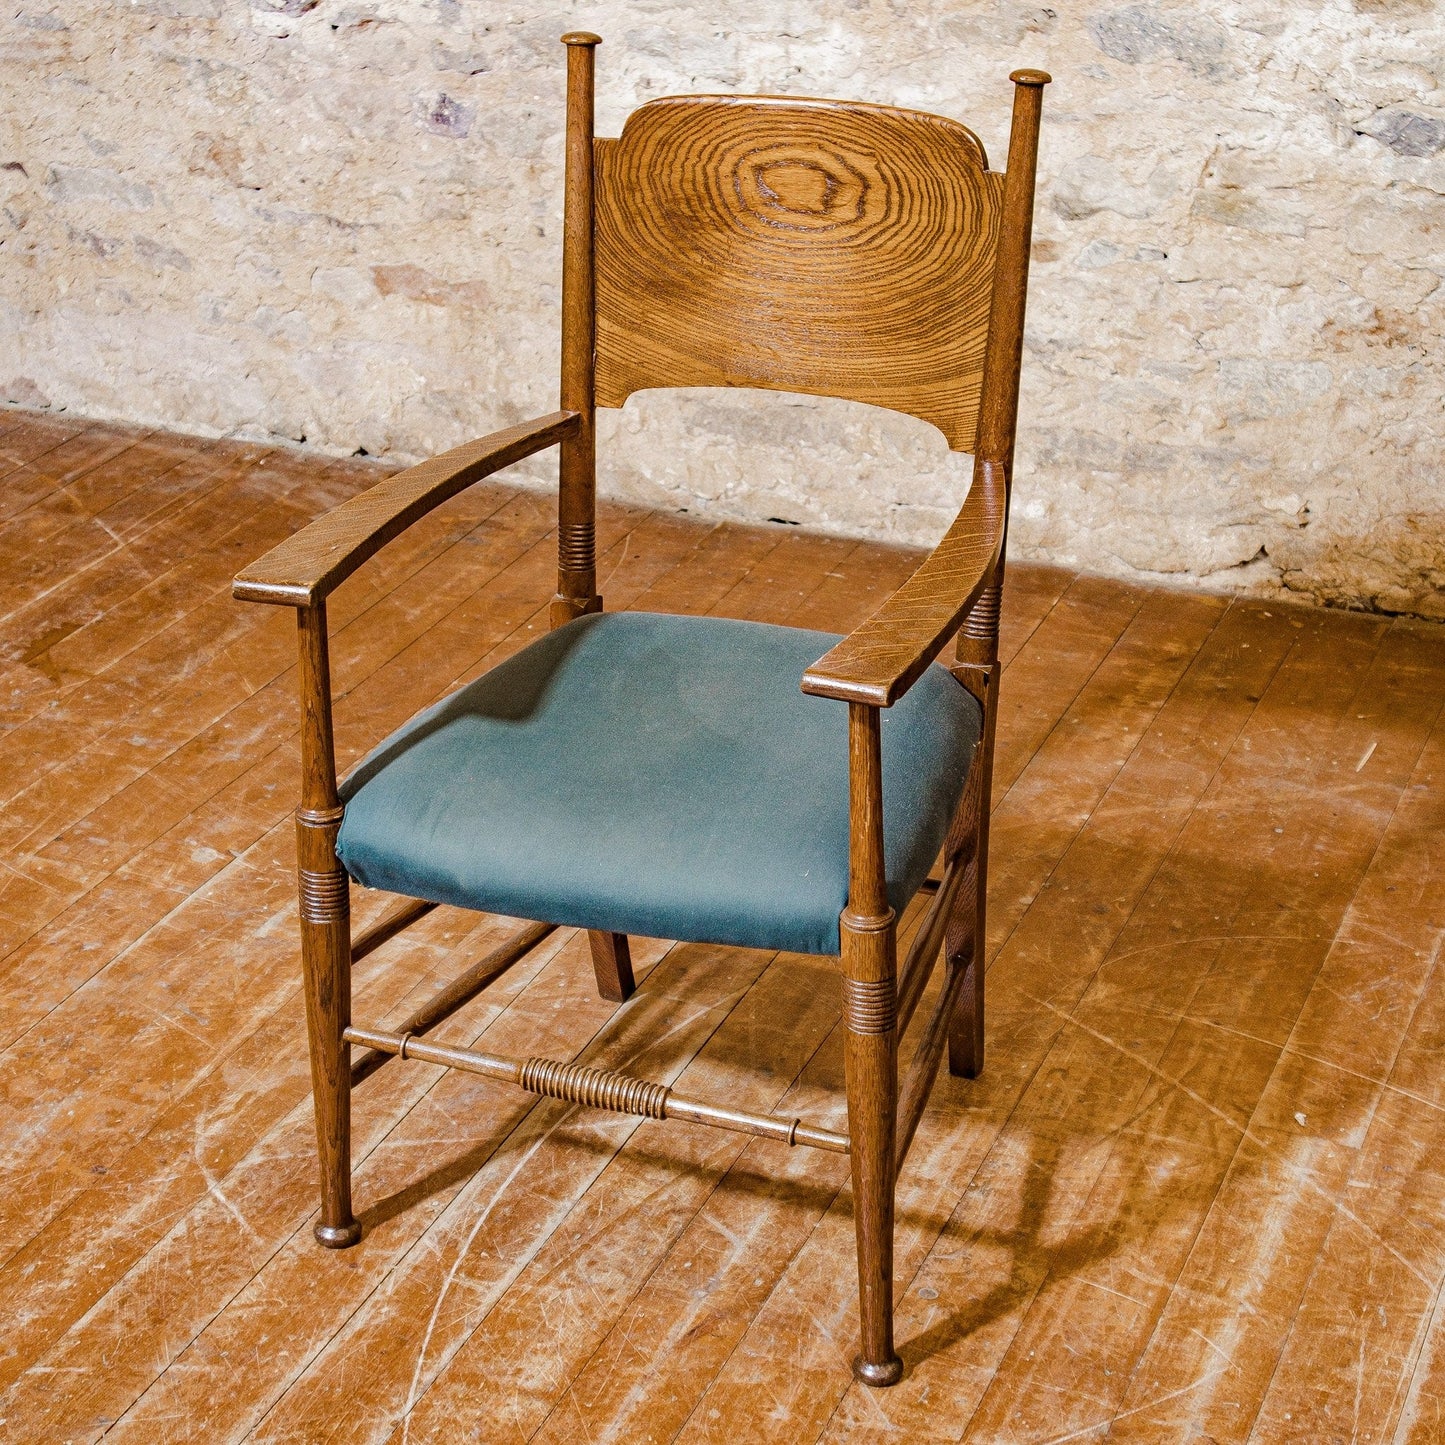 William Birch Set of 6 Arts & Crafts Cotswold School English Oak Chairs